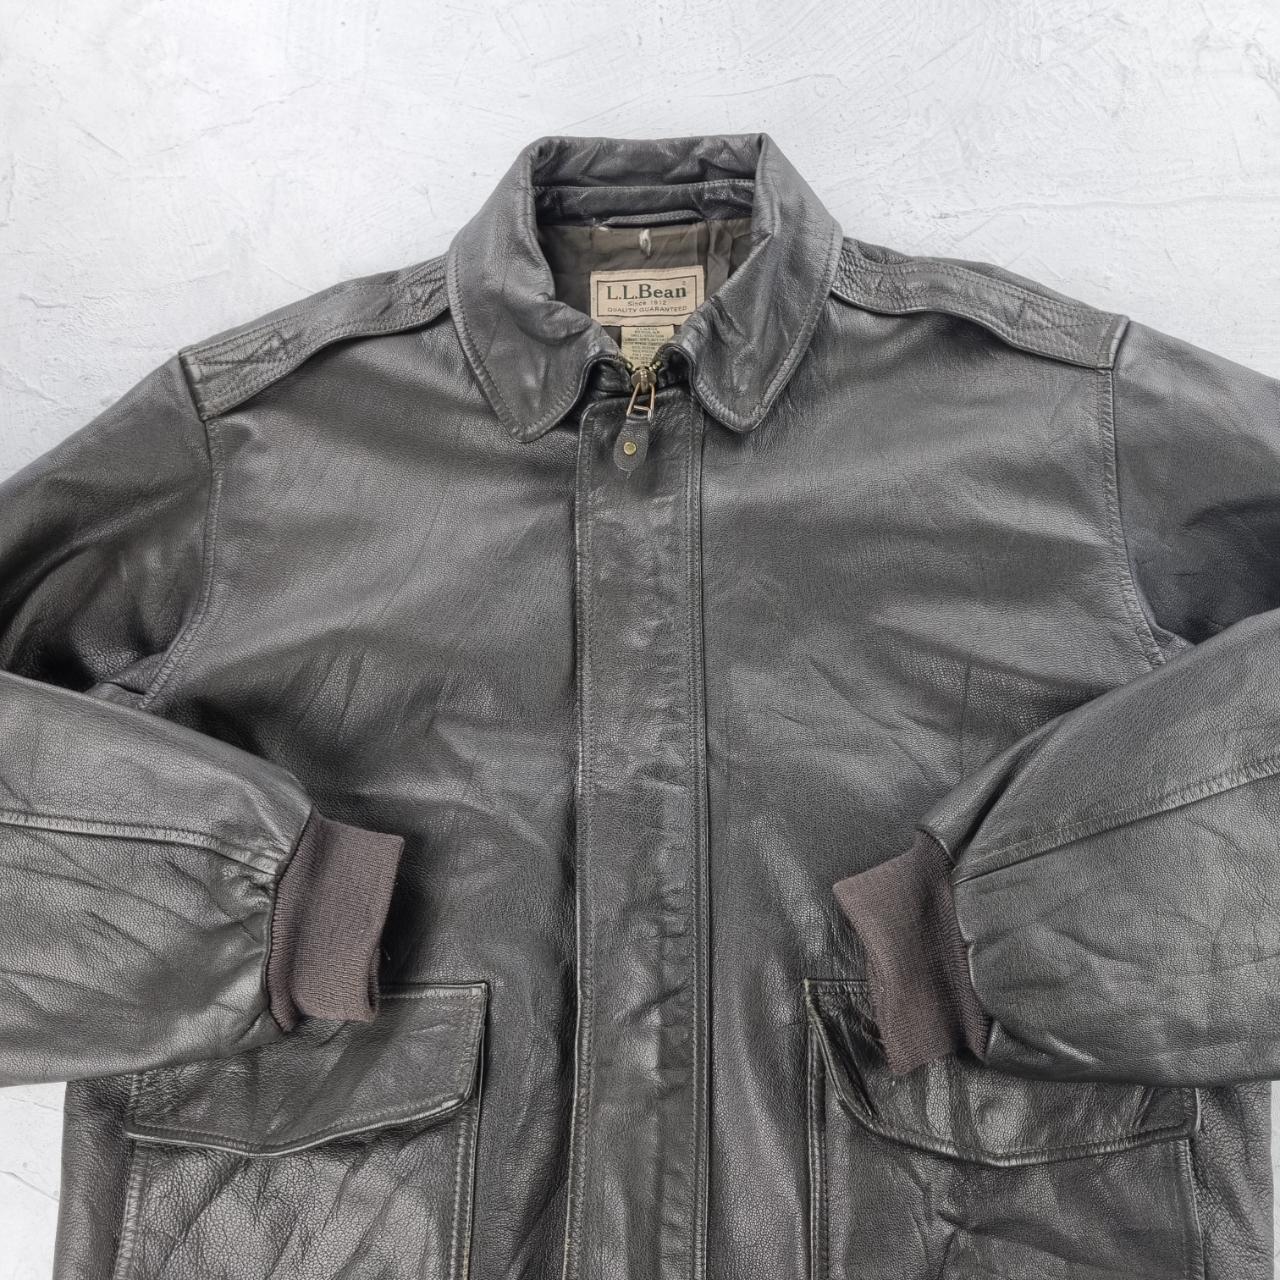 L.L.BEAN Vintage XL Leather jacket LL Bean 90s/00s... - Depop